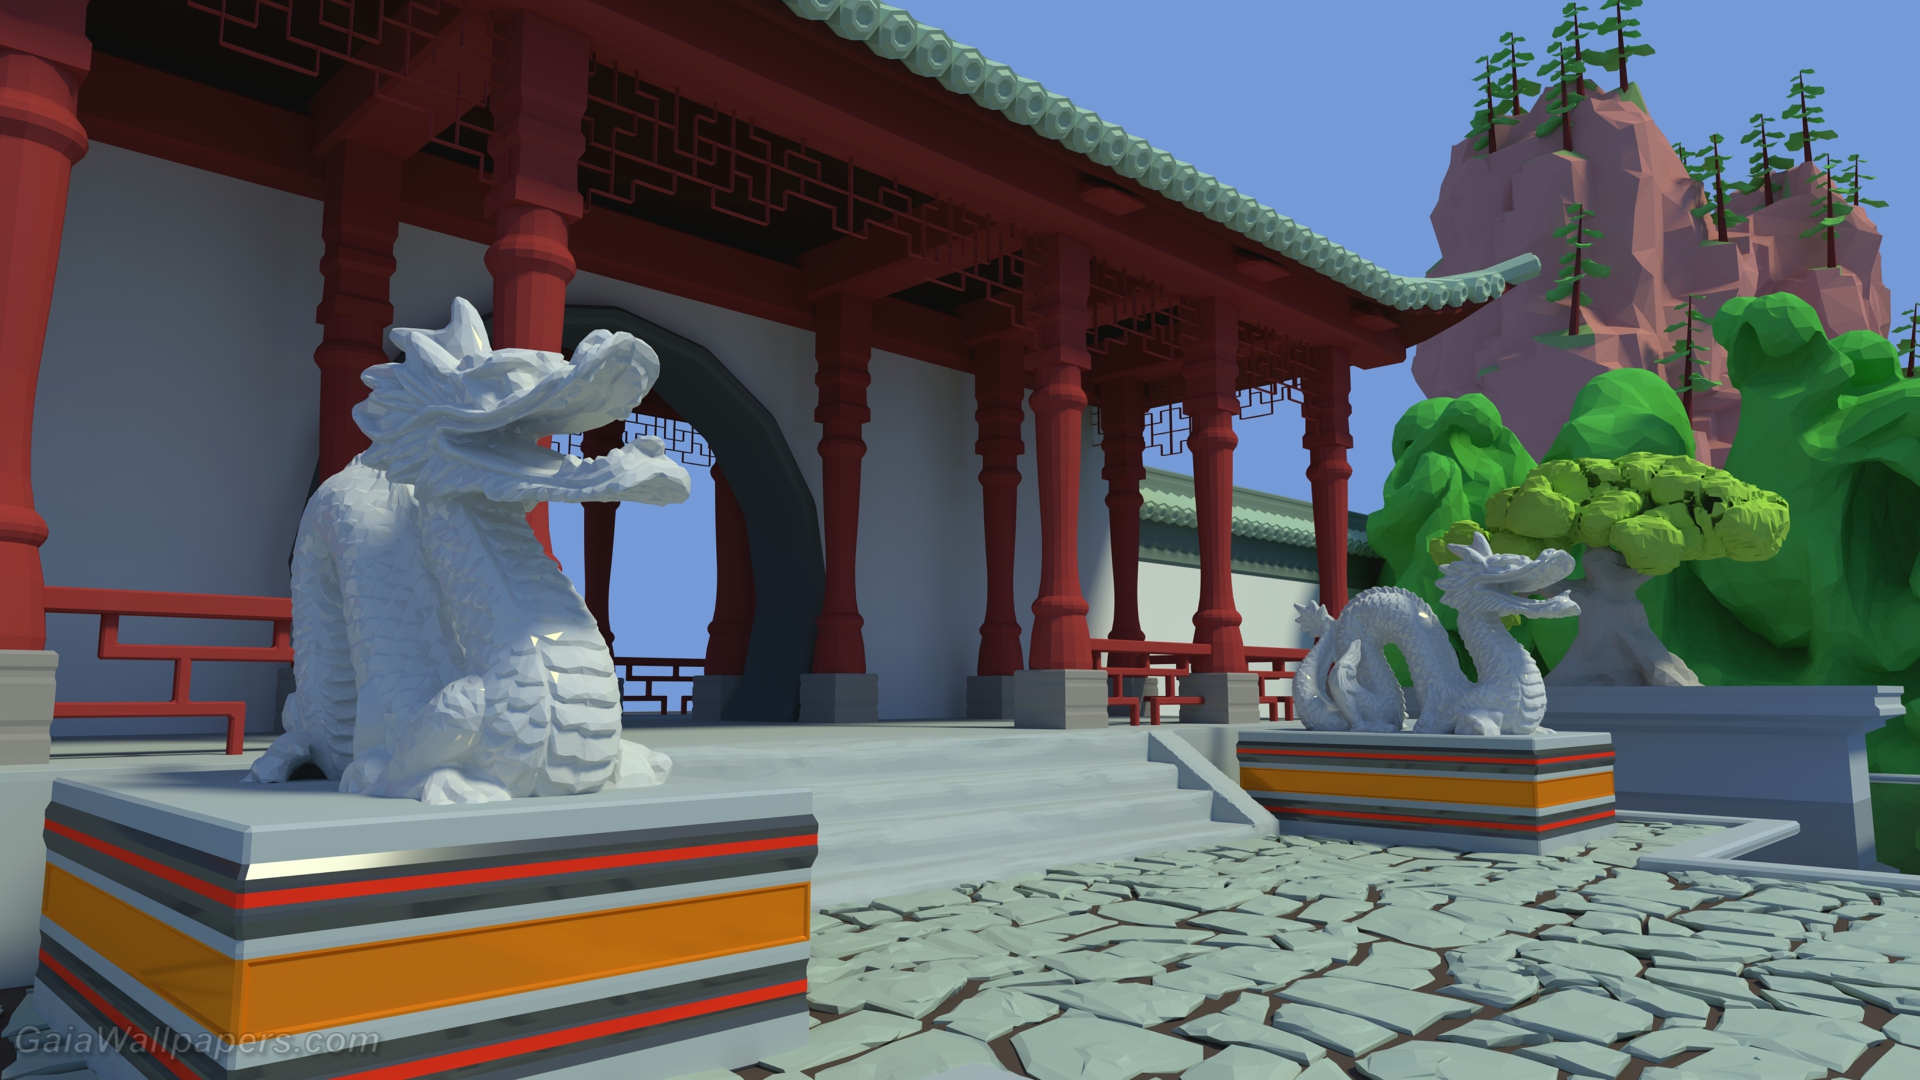 Chinese dragons guarding the garden gate - Free desktop wallpapers